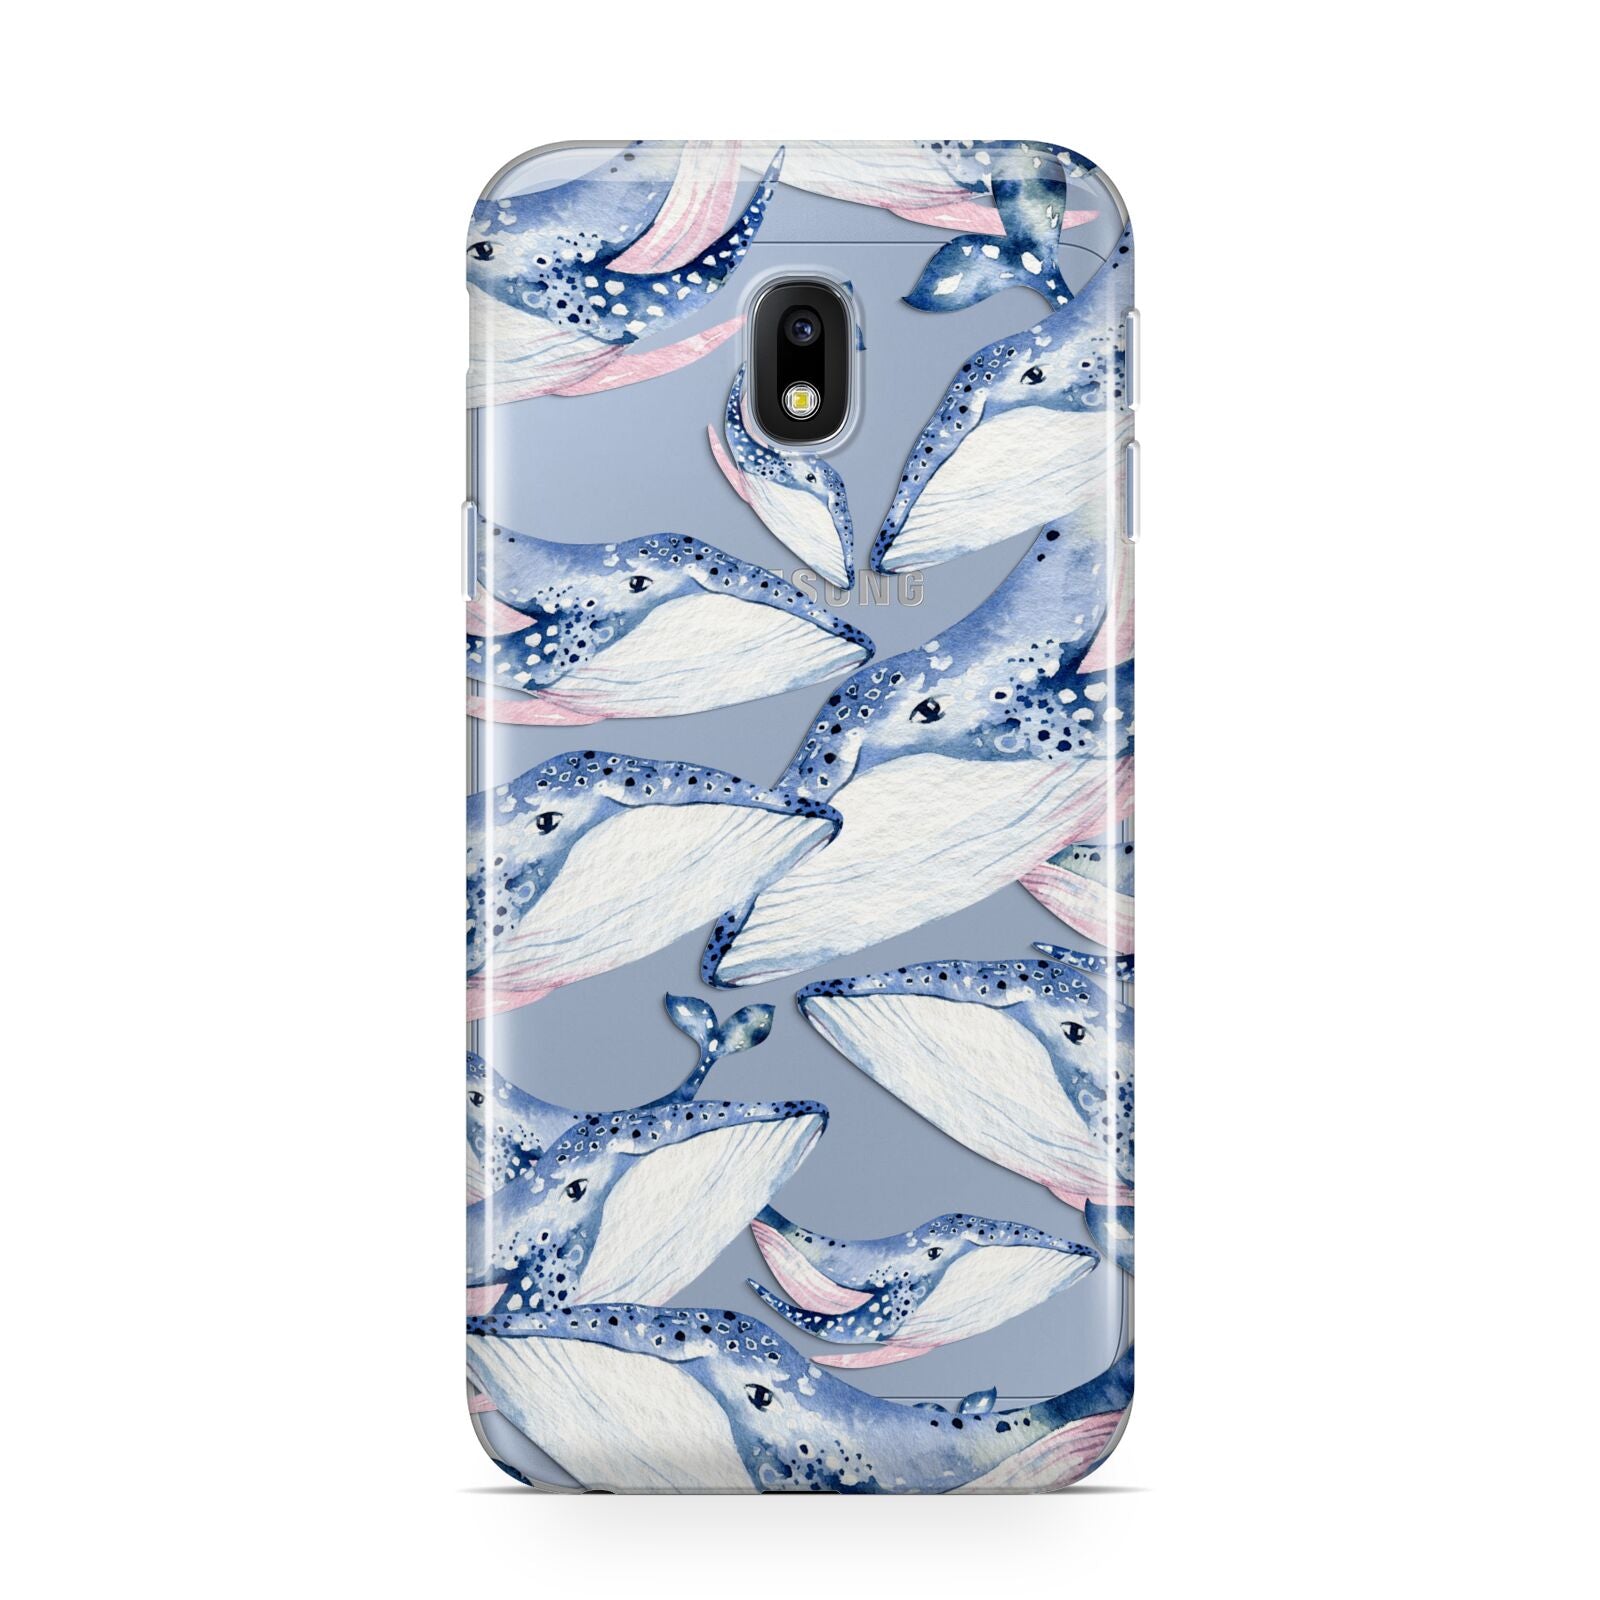 Whale Samsung Galaxy J3 2017 Case